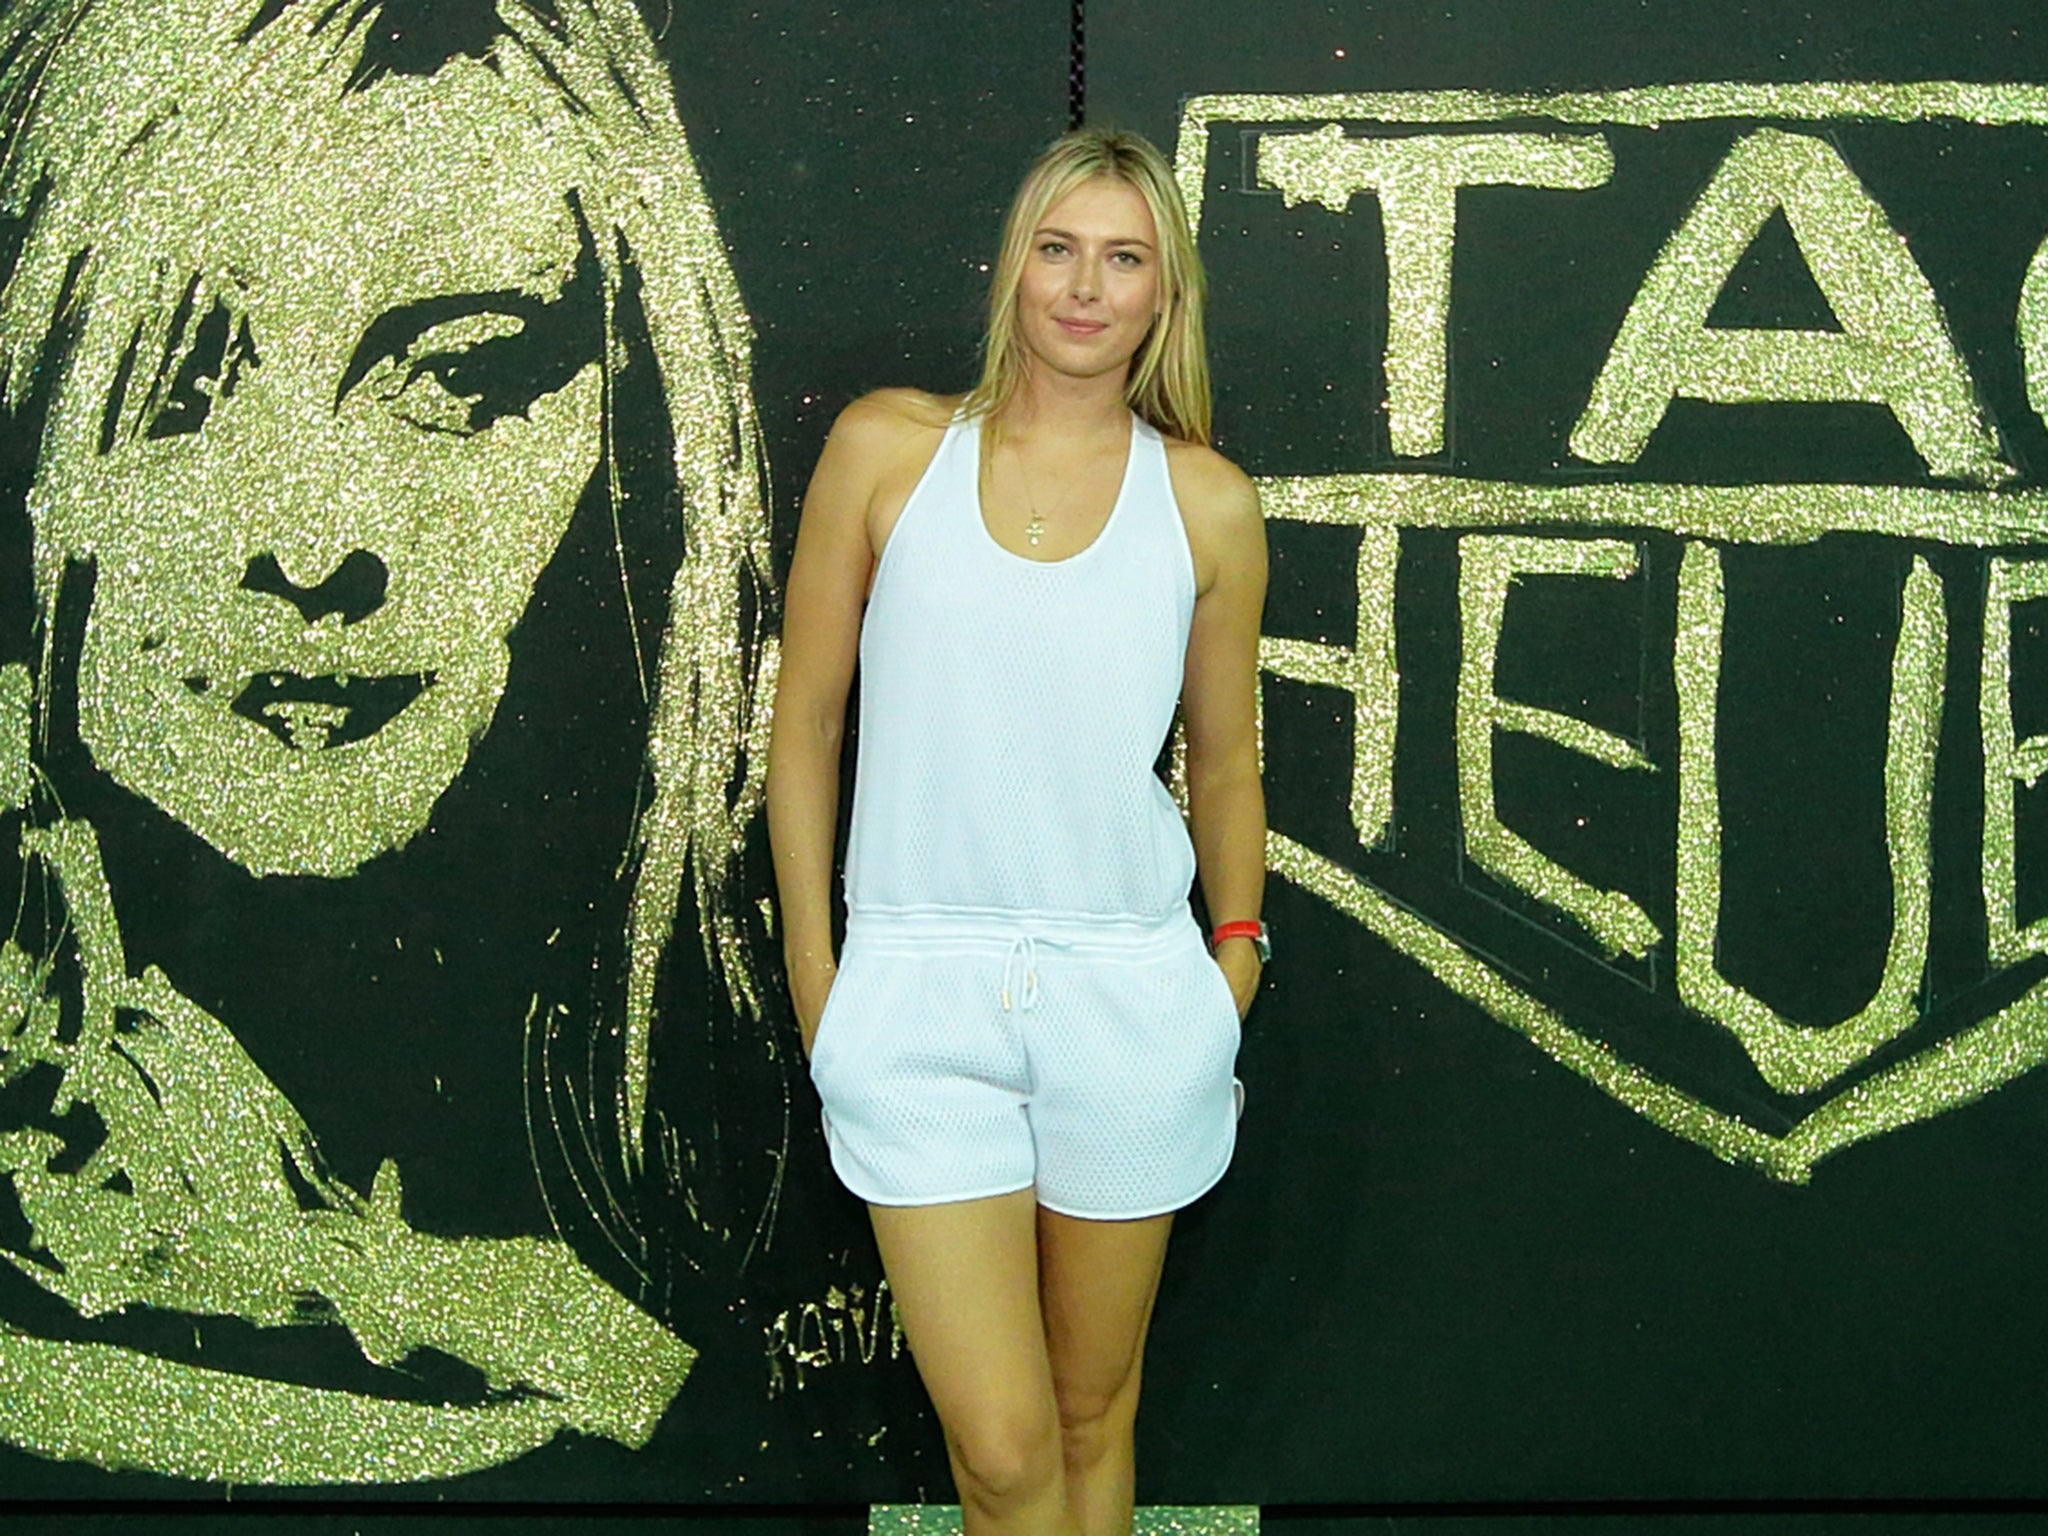 Maria Sharapova poses at a sponsor's event